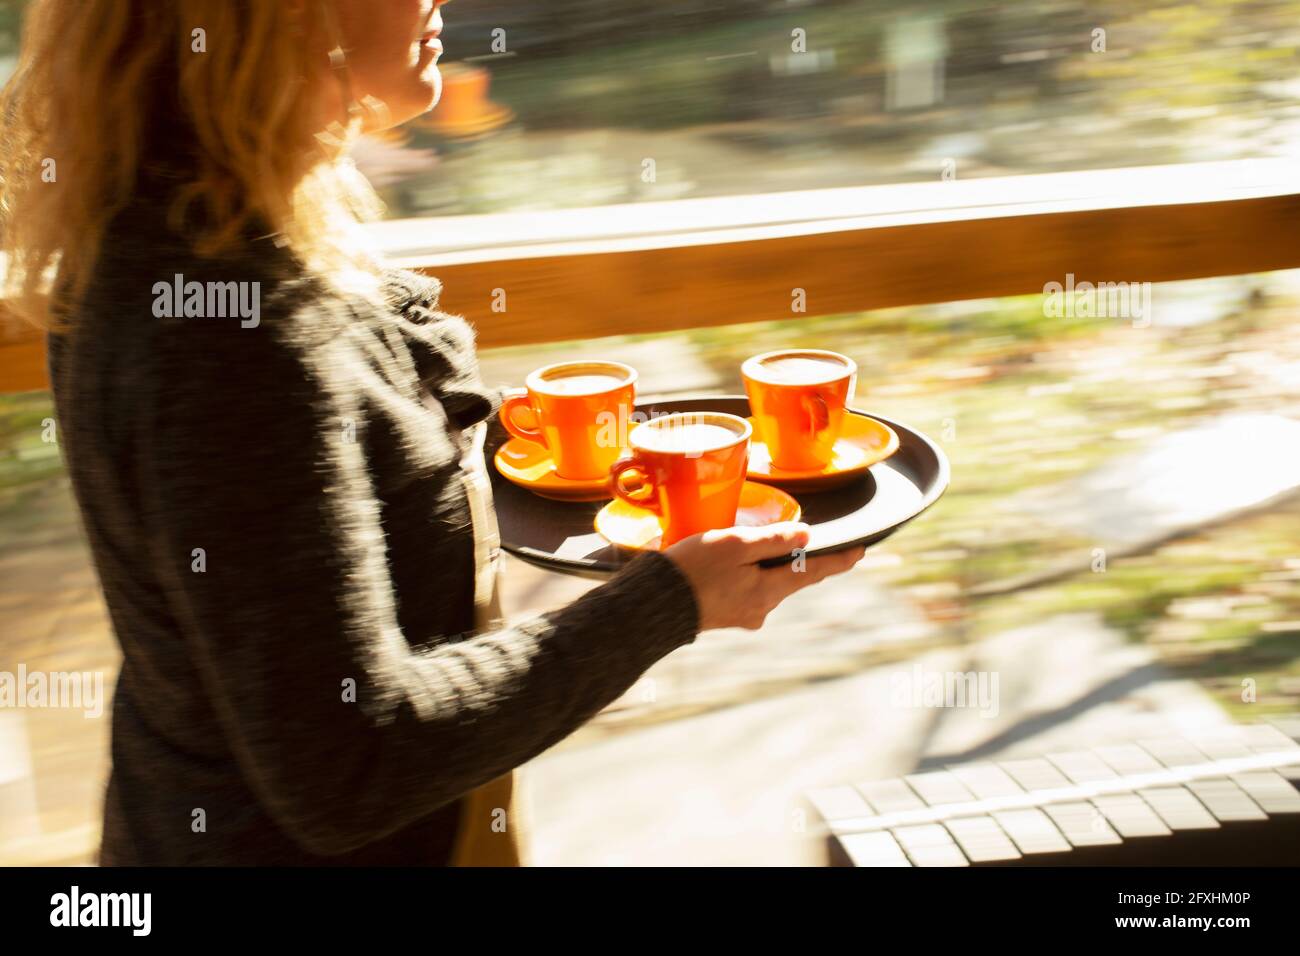 Girl's Hand Watch Bracelet Cup Coffee Foam Tray Accessories Tea Stock Photo  by ©ivankyryk 232853148